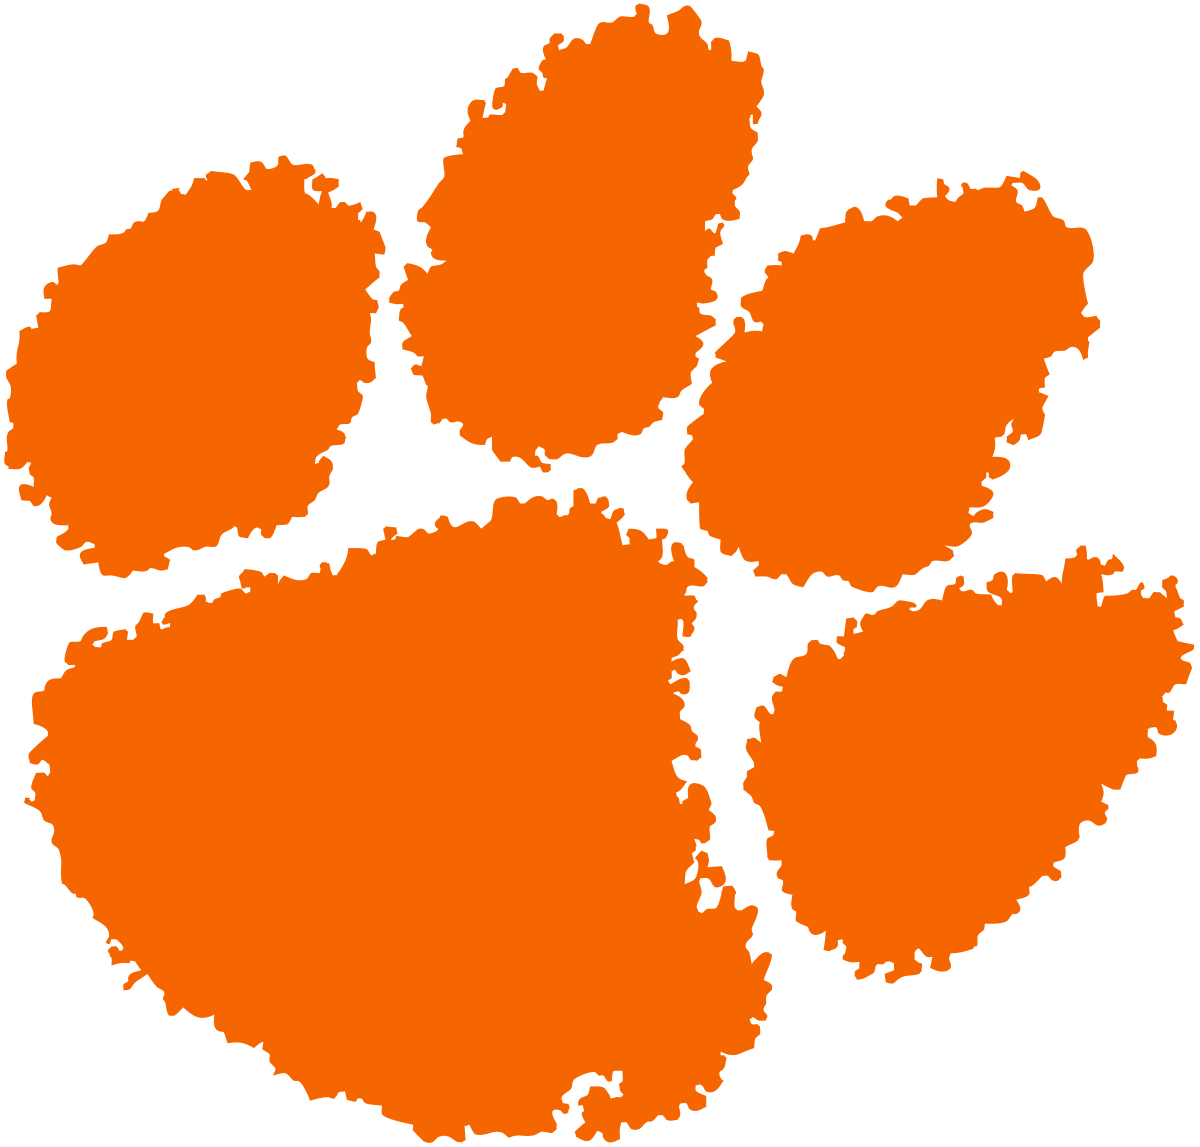 Clemson Tigers - Wikipedia